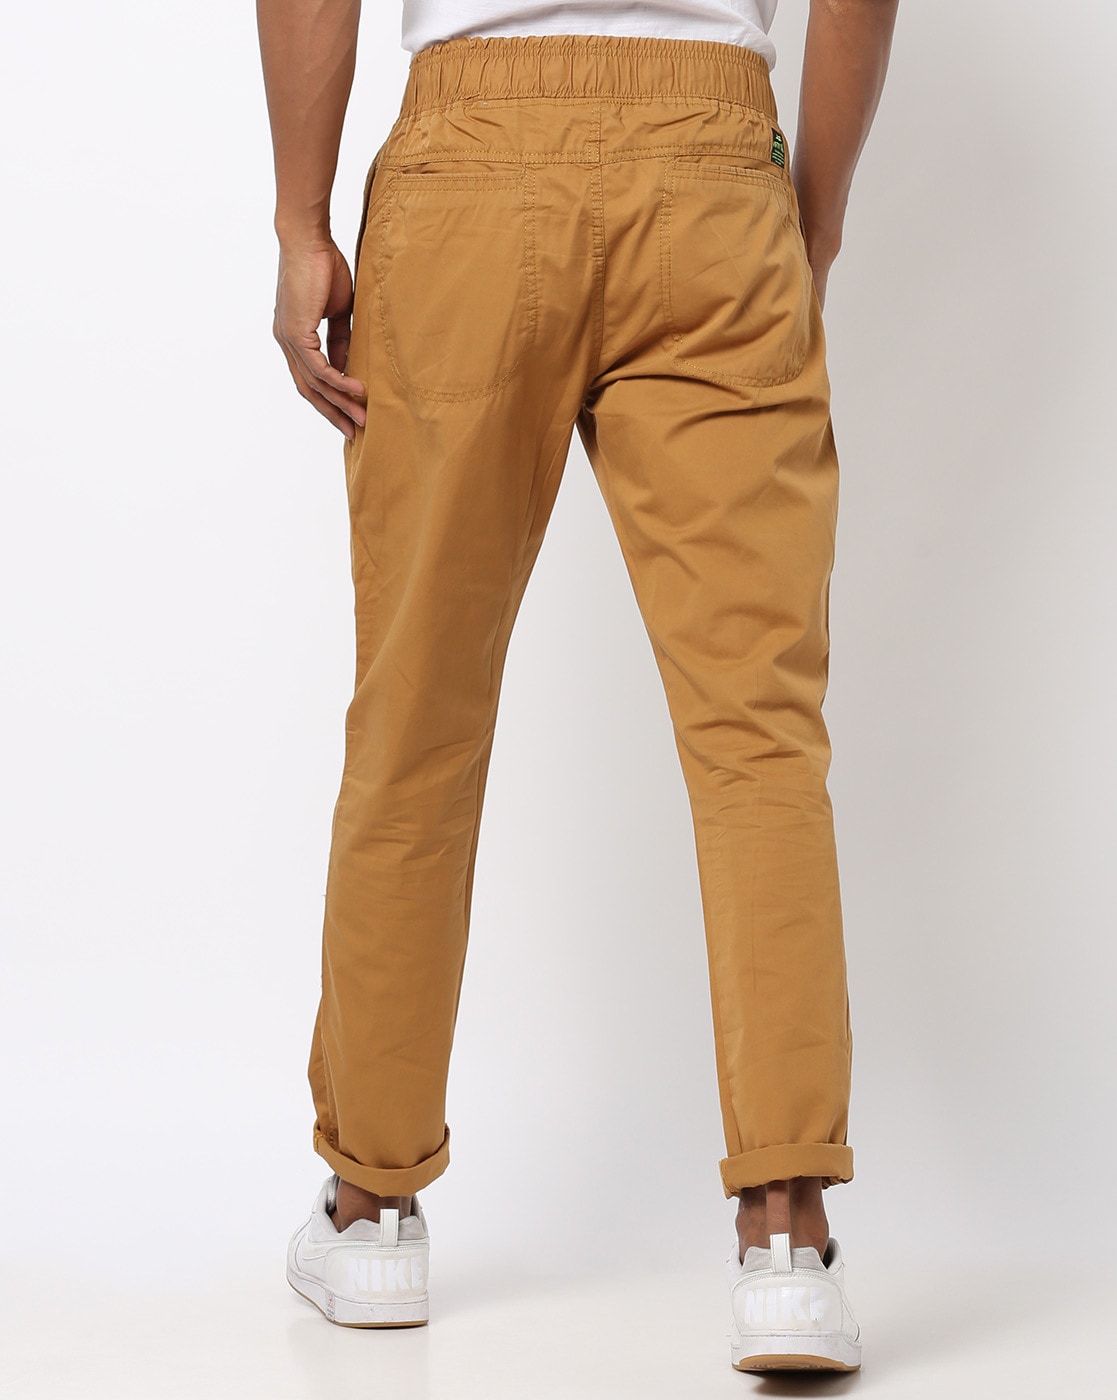 Regular Fit Cotton twill trousers - Dark khaki green - Men | H&M IN